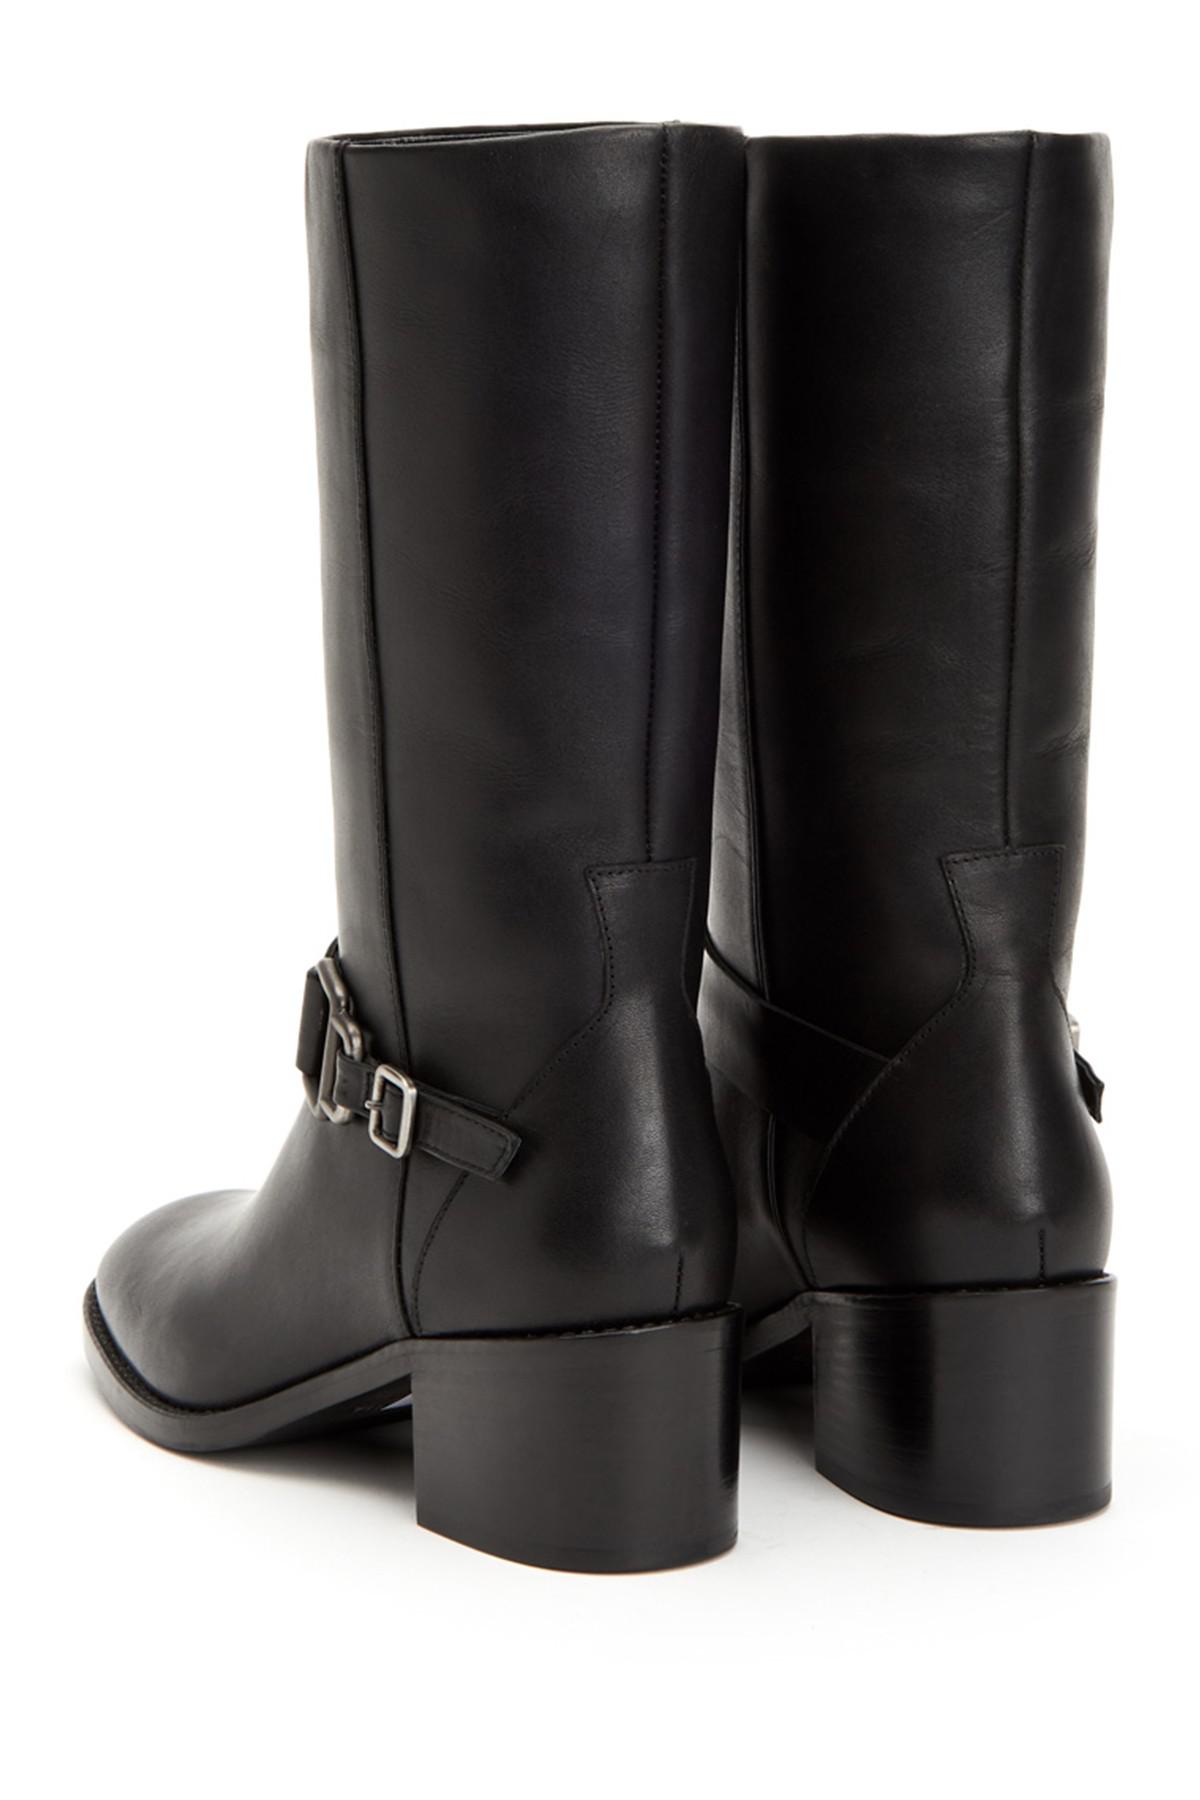 Aquatalia Leather Juliane Boot in Black 